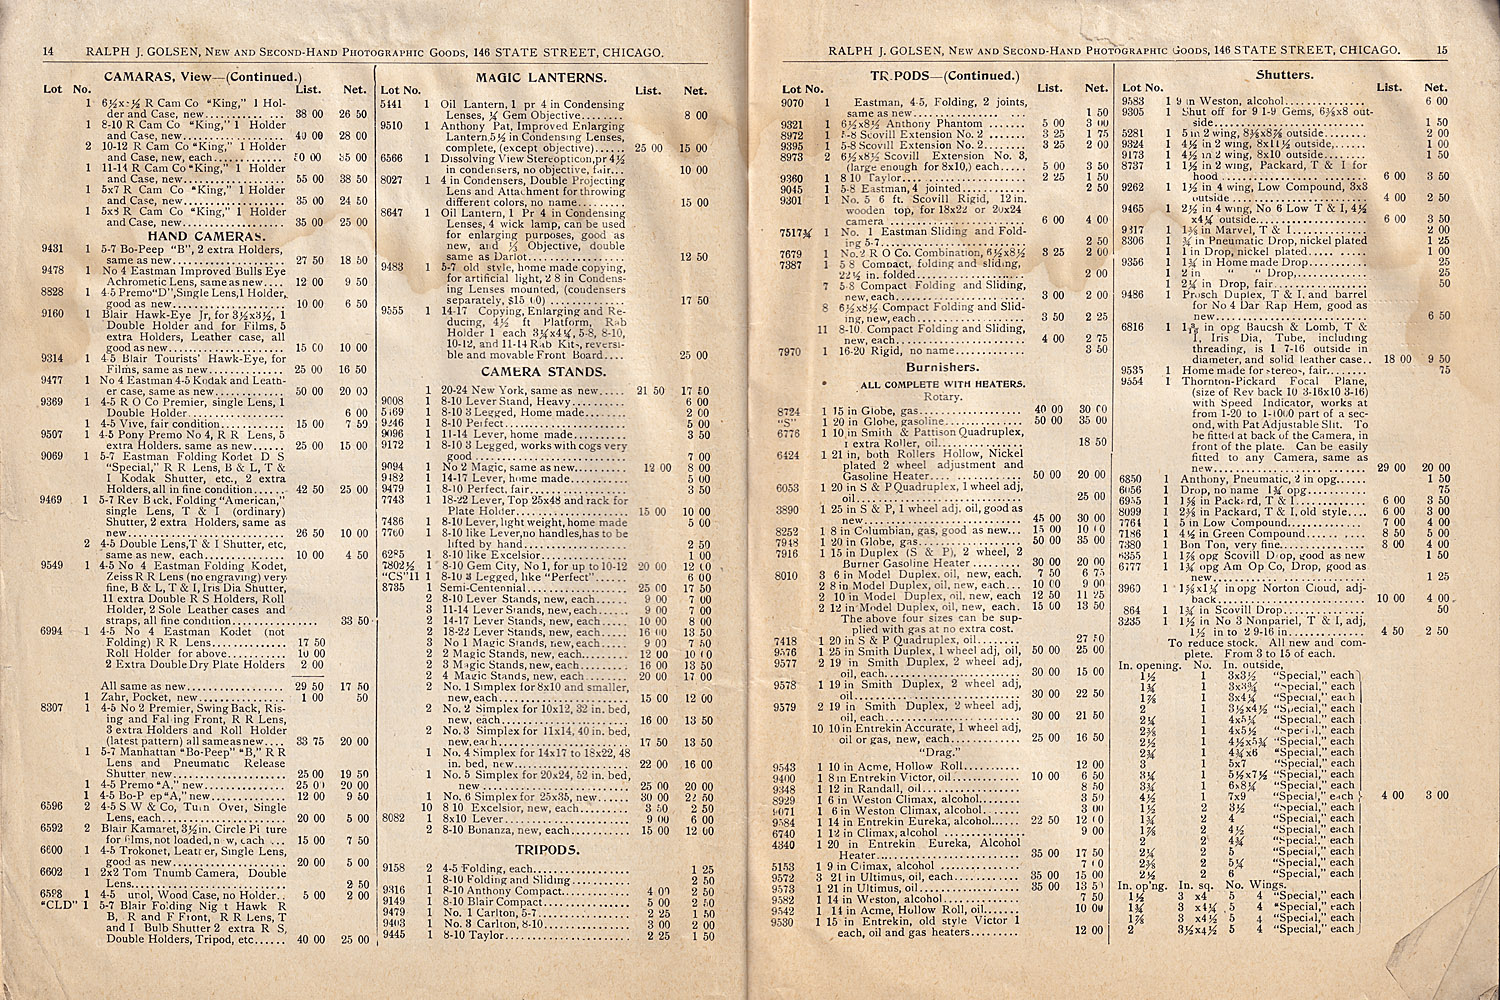 1118.golson.cat.&.bargain.list.no11.1898-14-15-1500.jpg